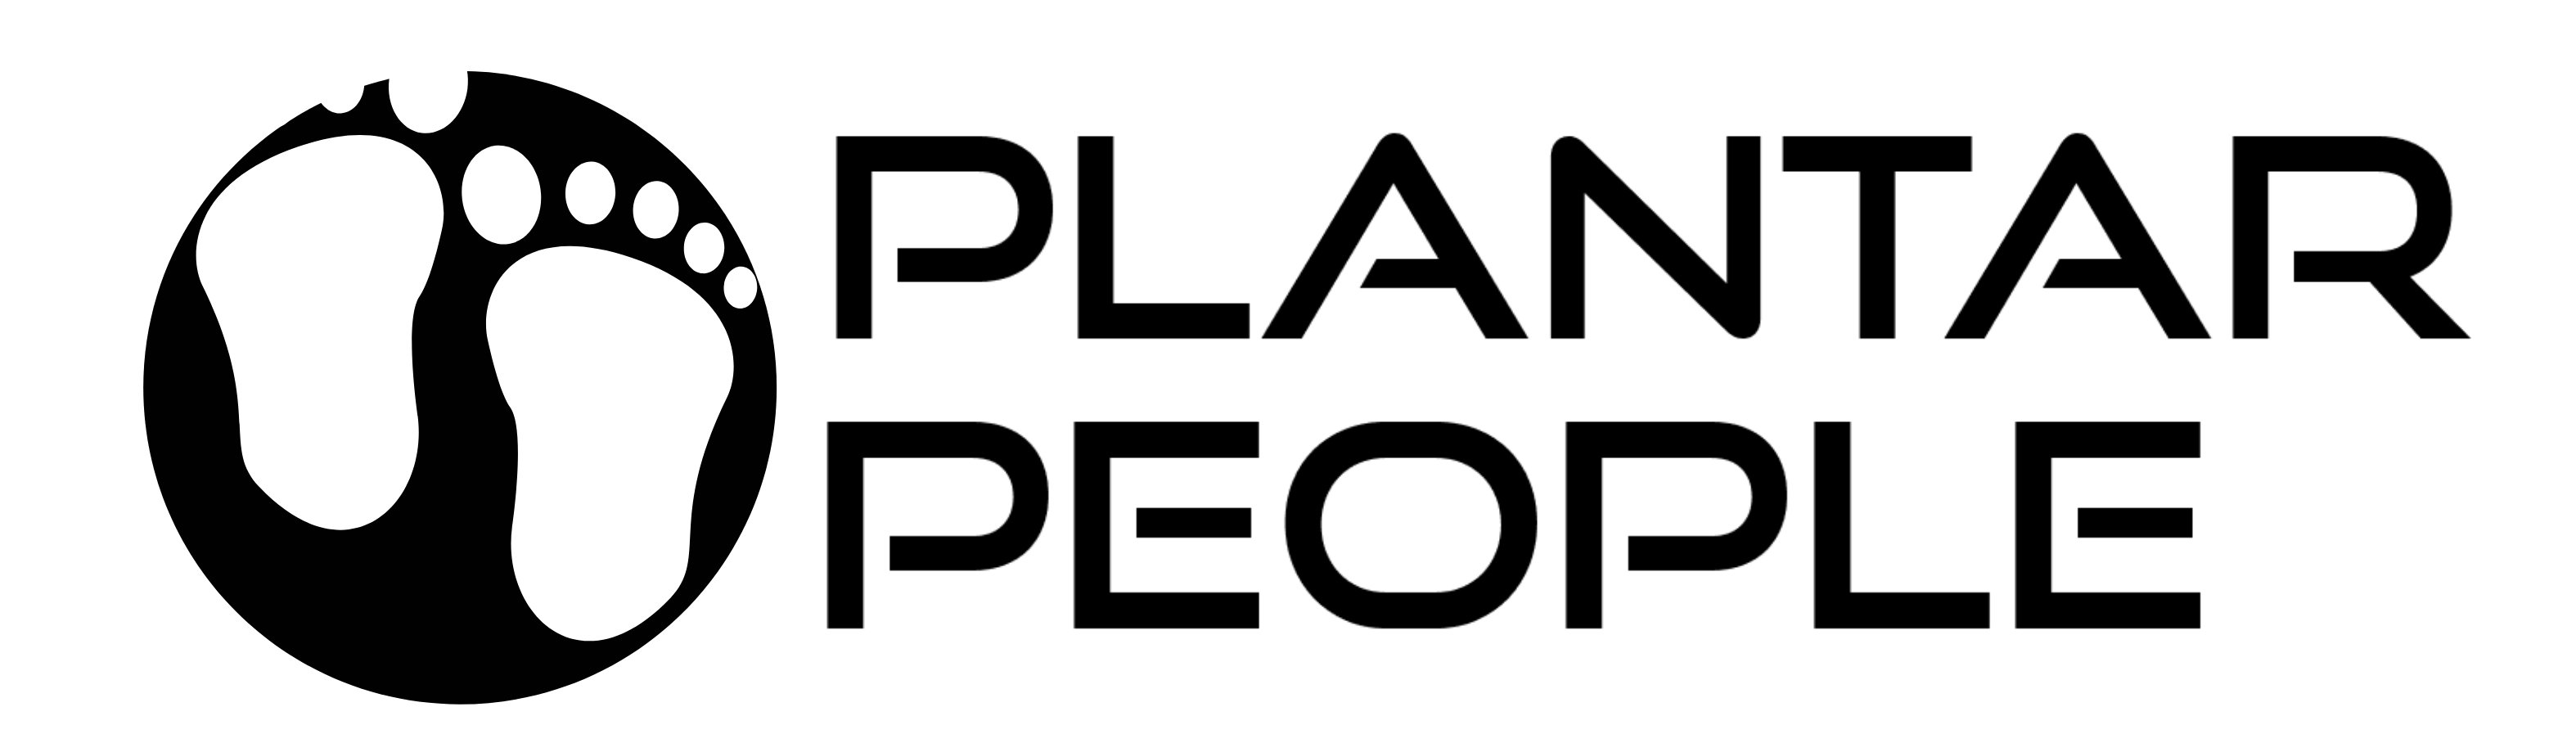 Plantar People